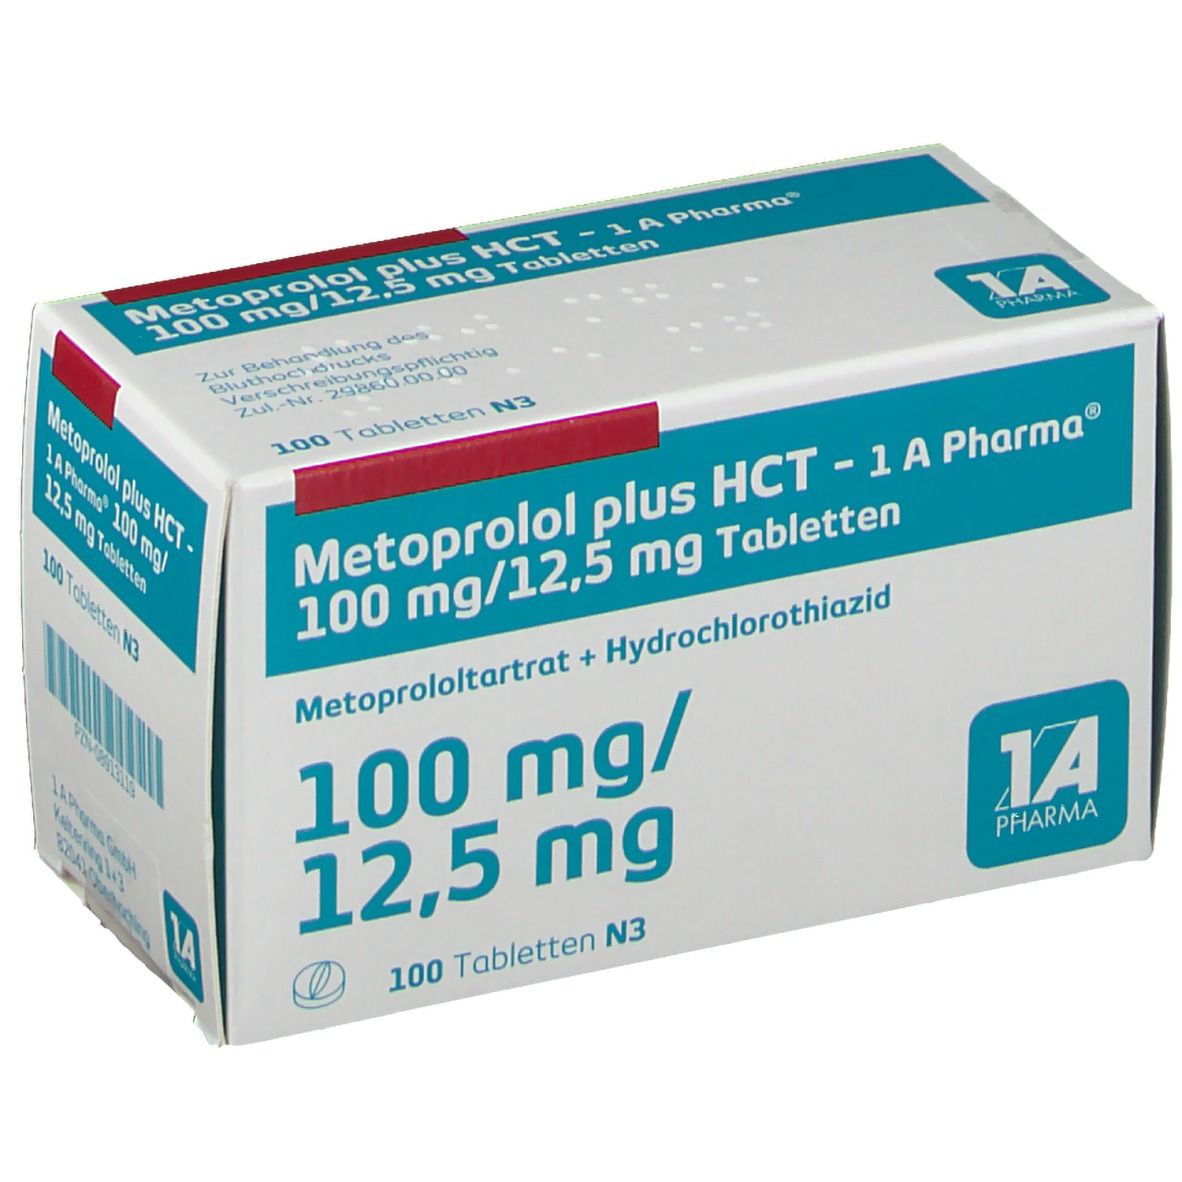 Metoprolol Plhct1A100/12.5